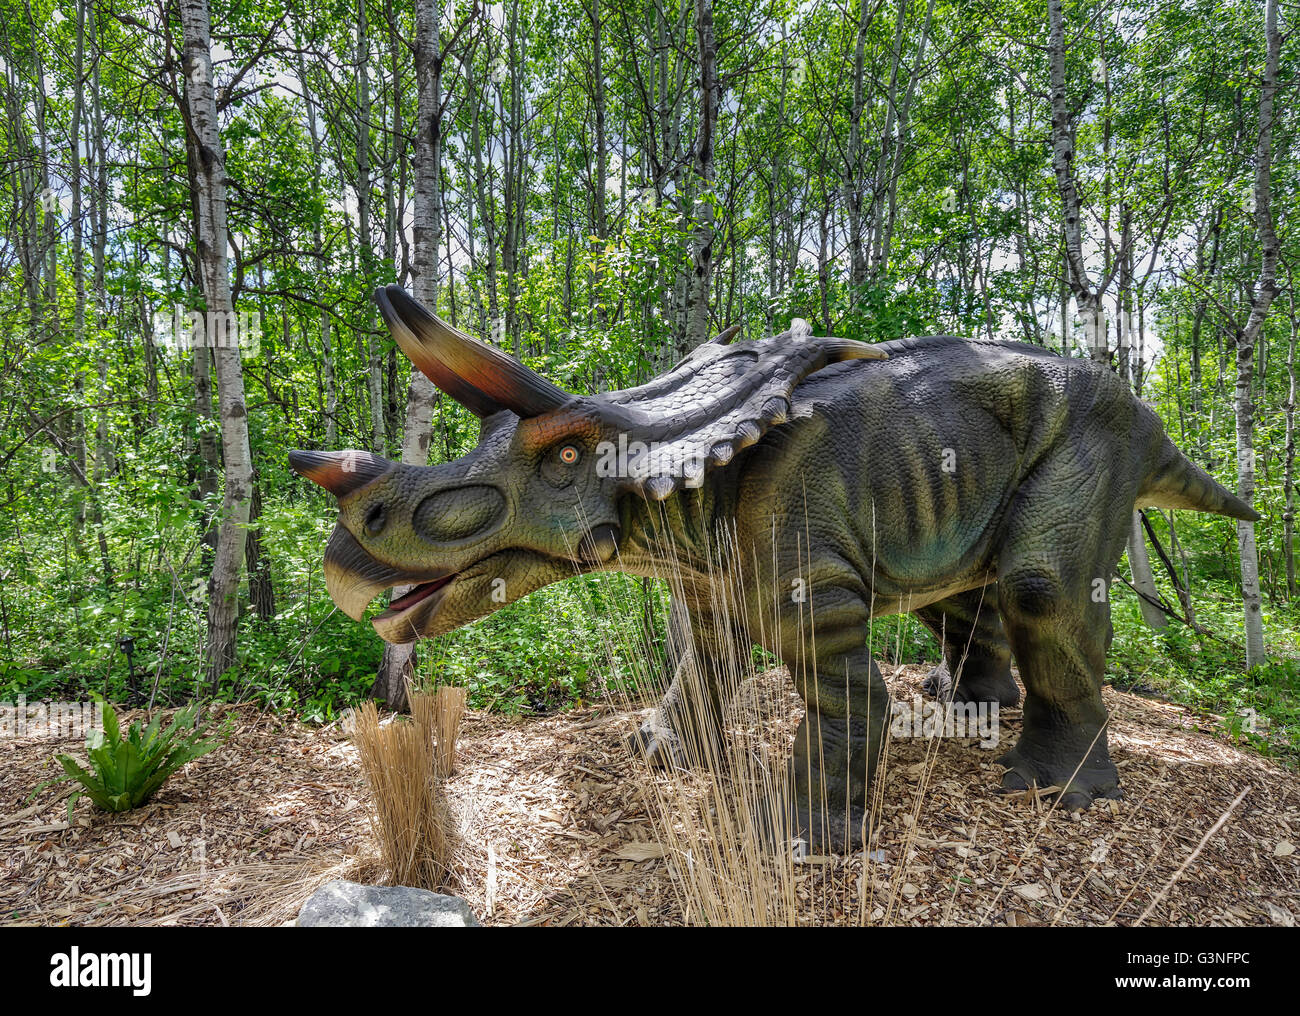 Mojoceratops Dinosaurier lebendig, Assiniboine Park Zoo, Winnipeg, Manitoba, Kanada. Stockfoto